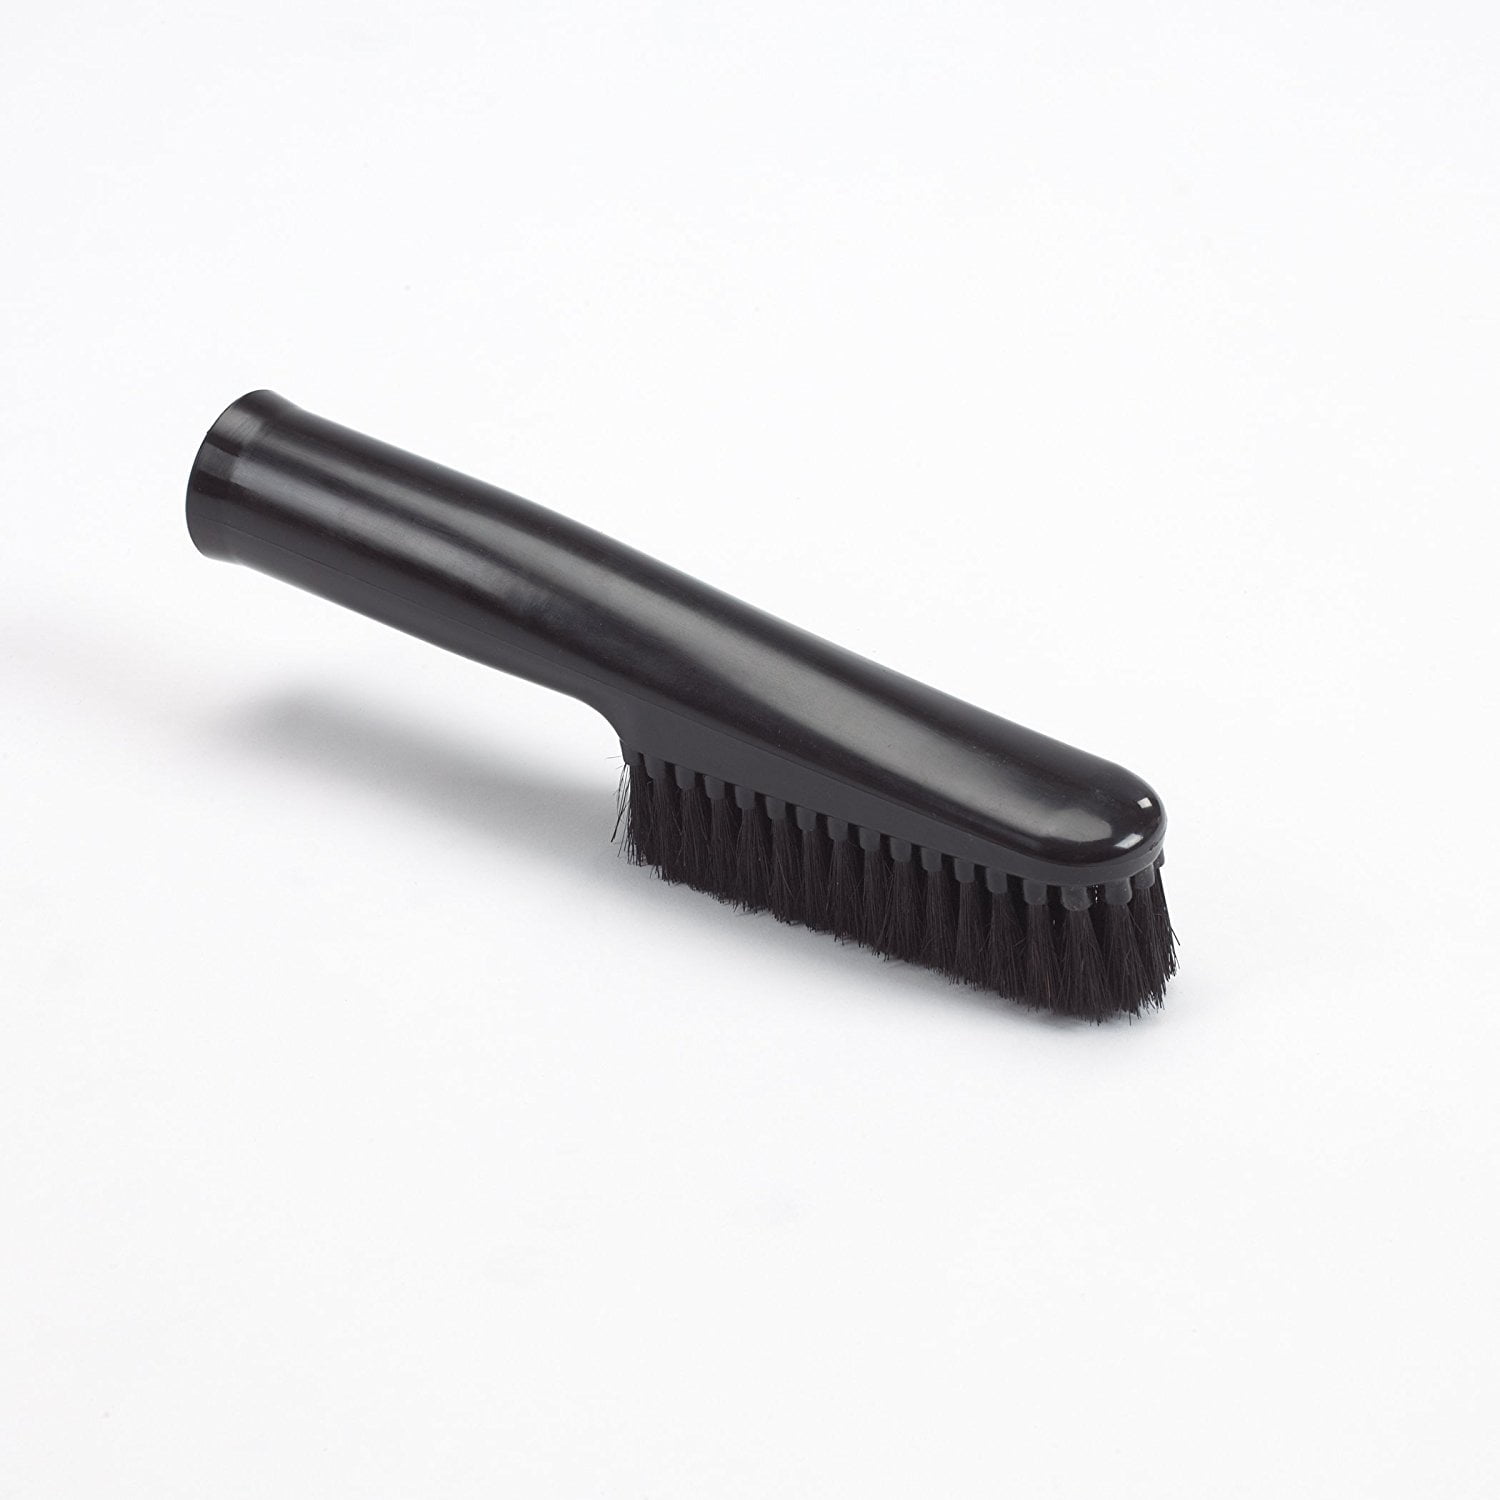 Shop-Vac 9018100 1 1/4-Inch Firm Bristle Auto Brush